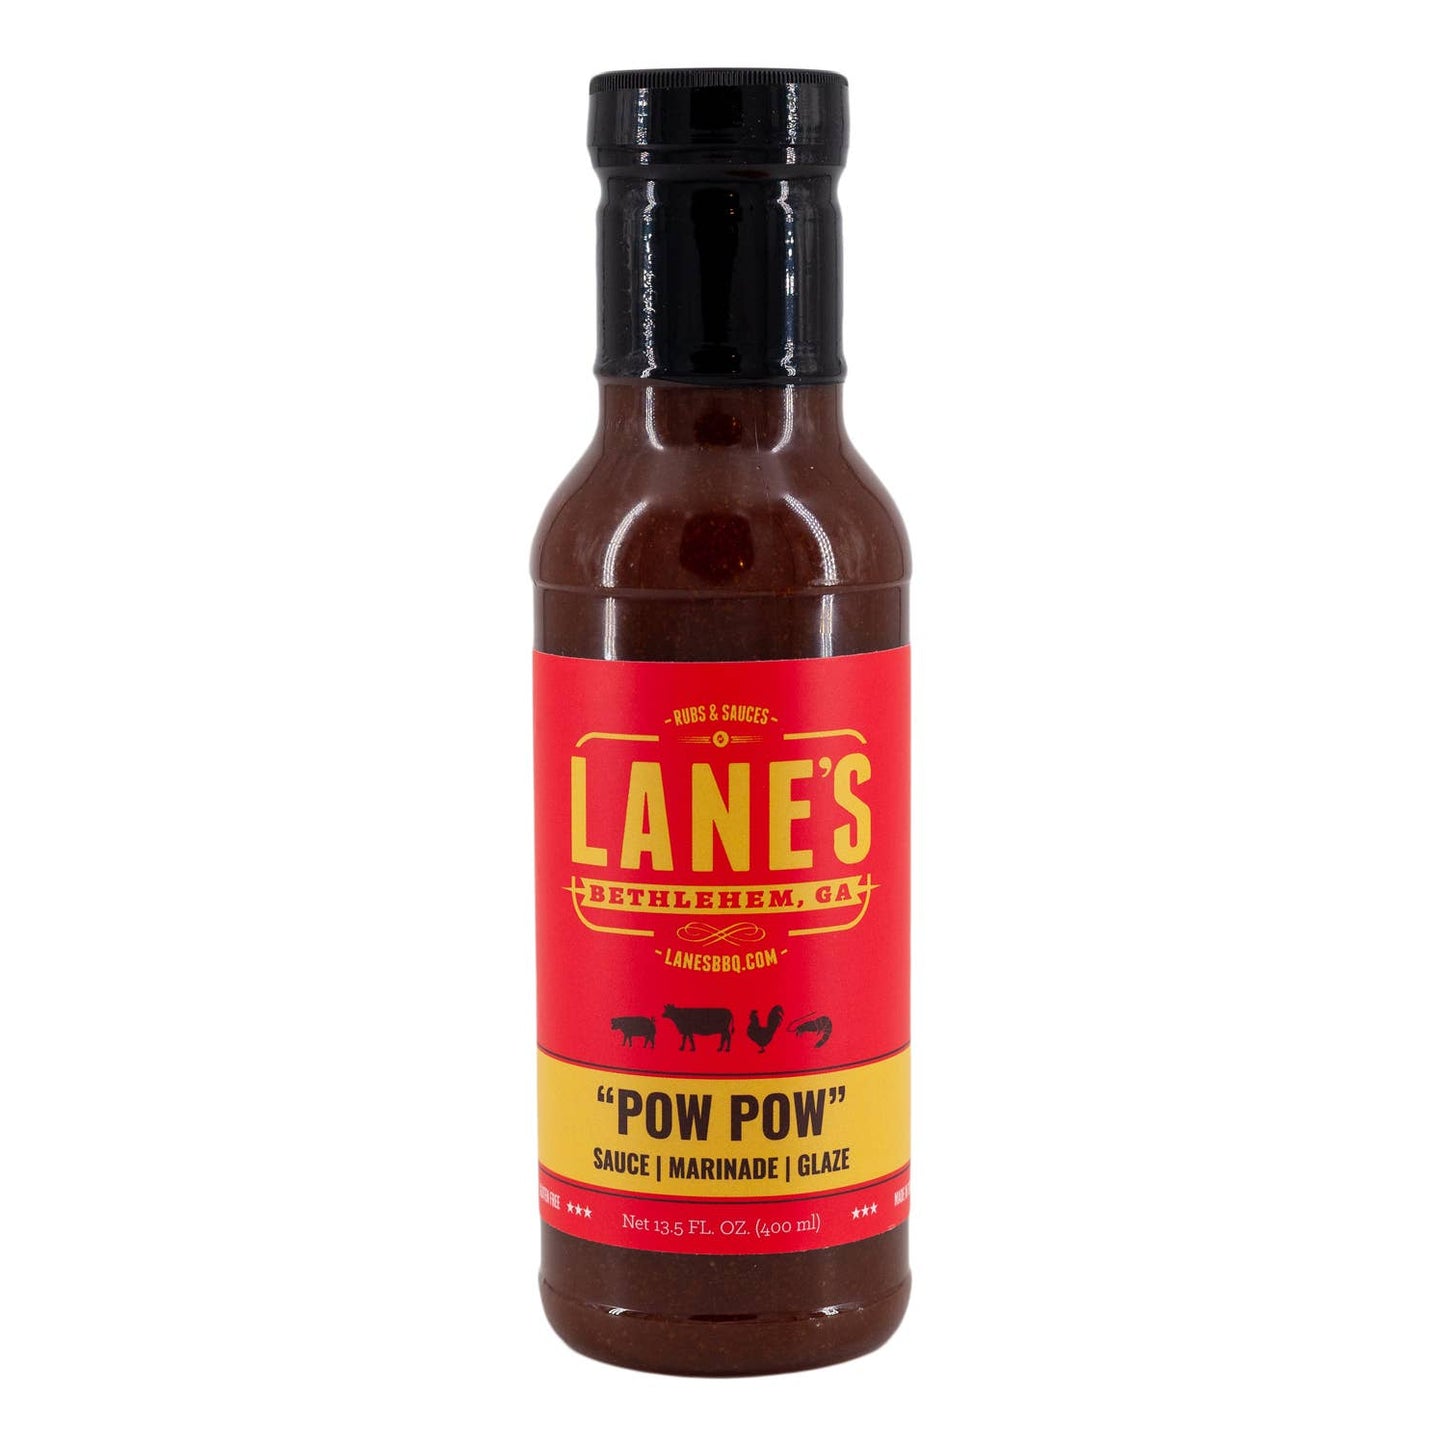 Lane's BBQ - Pow Pow Marinade/Sauce - 13.5oz Bottle